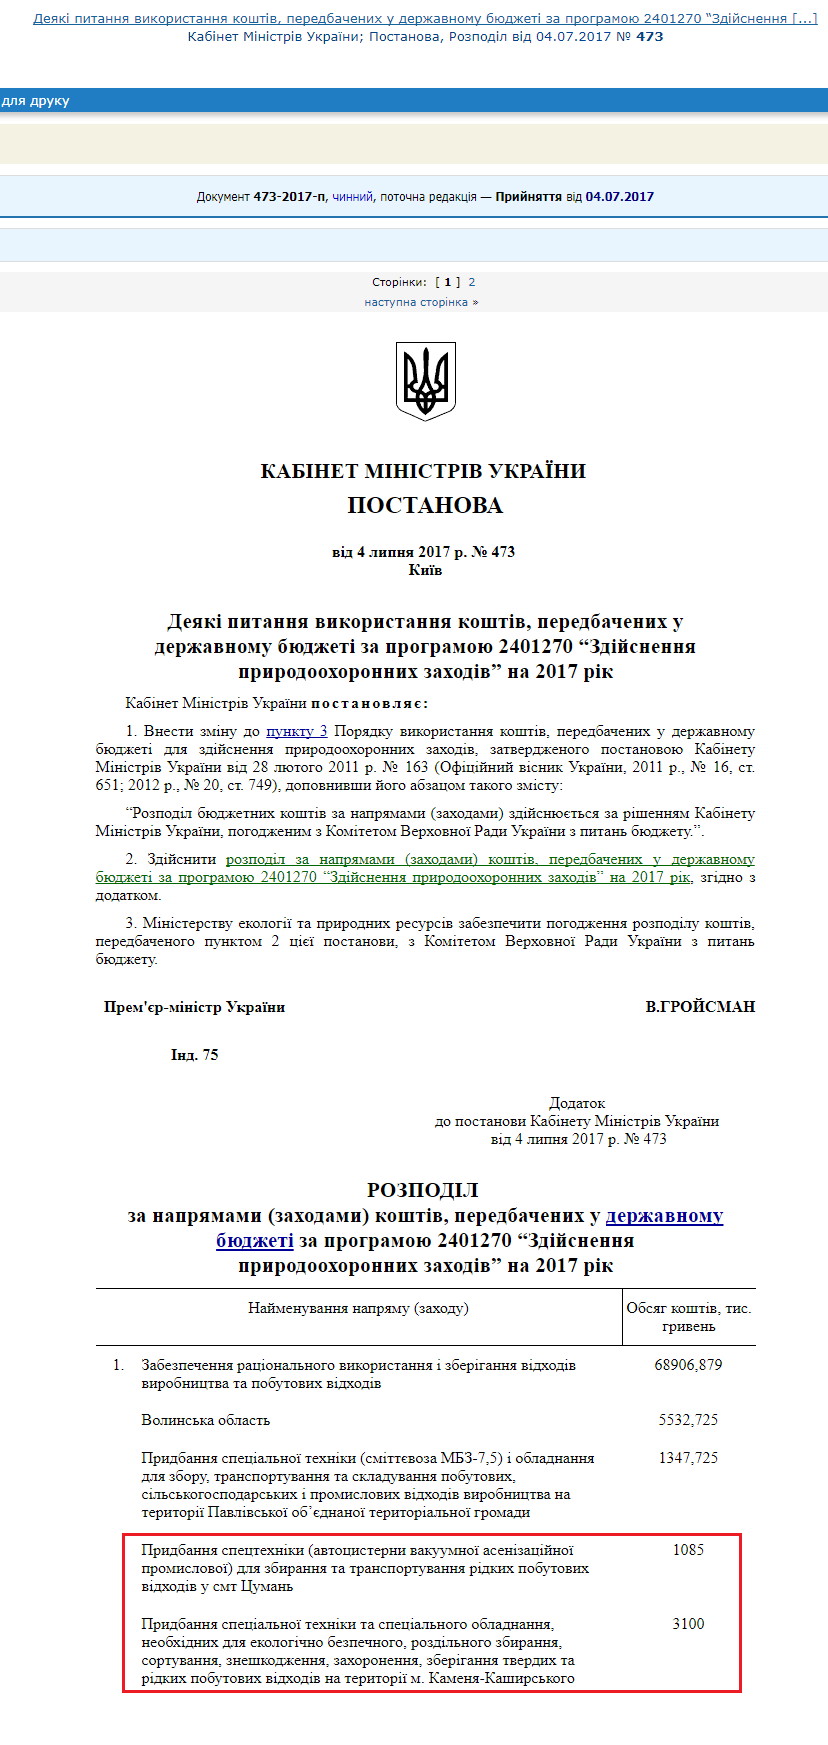 http://zakon3.rada.gov.ua/laws/show/473-2017-%D0%BF/print